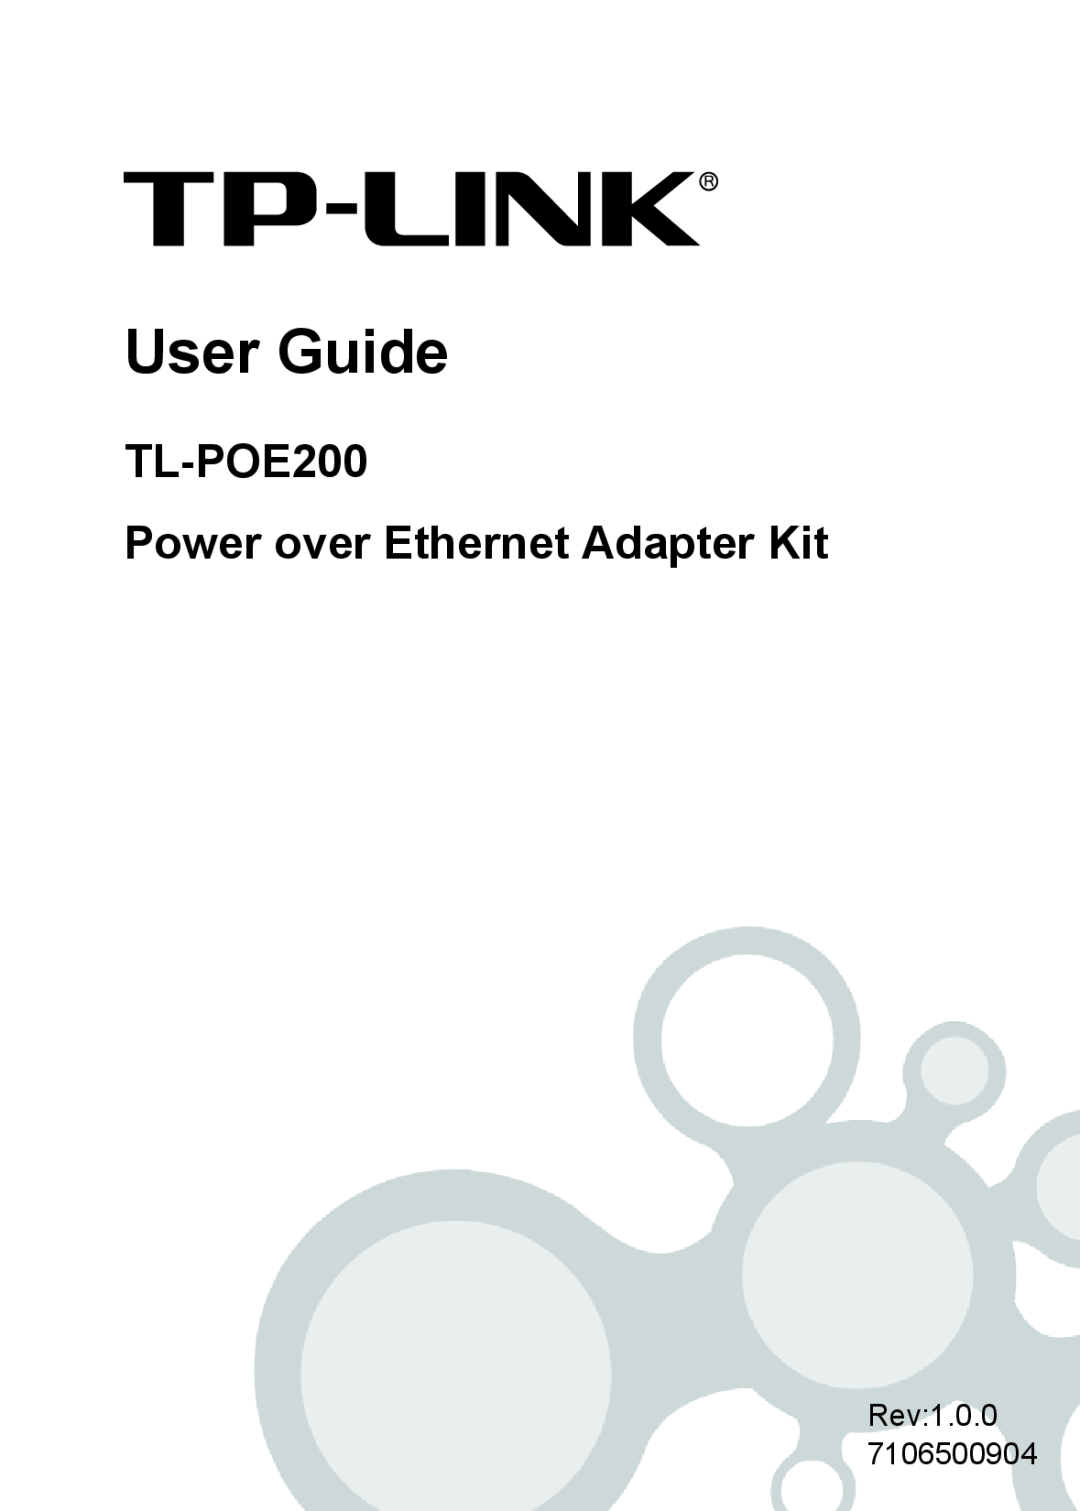 TP-Link manual User Guide, TL-POE200 Power over Ethernet Adapter Kit 